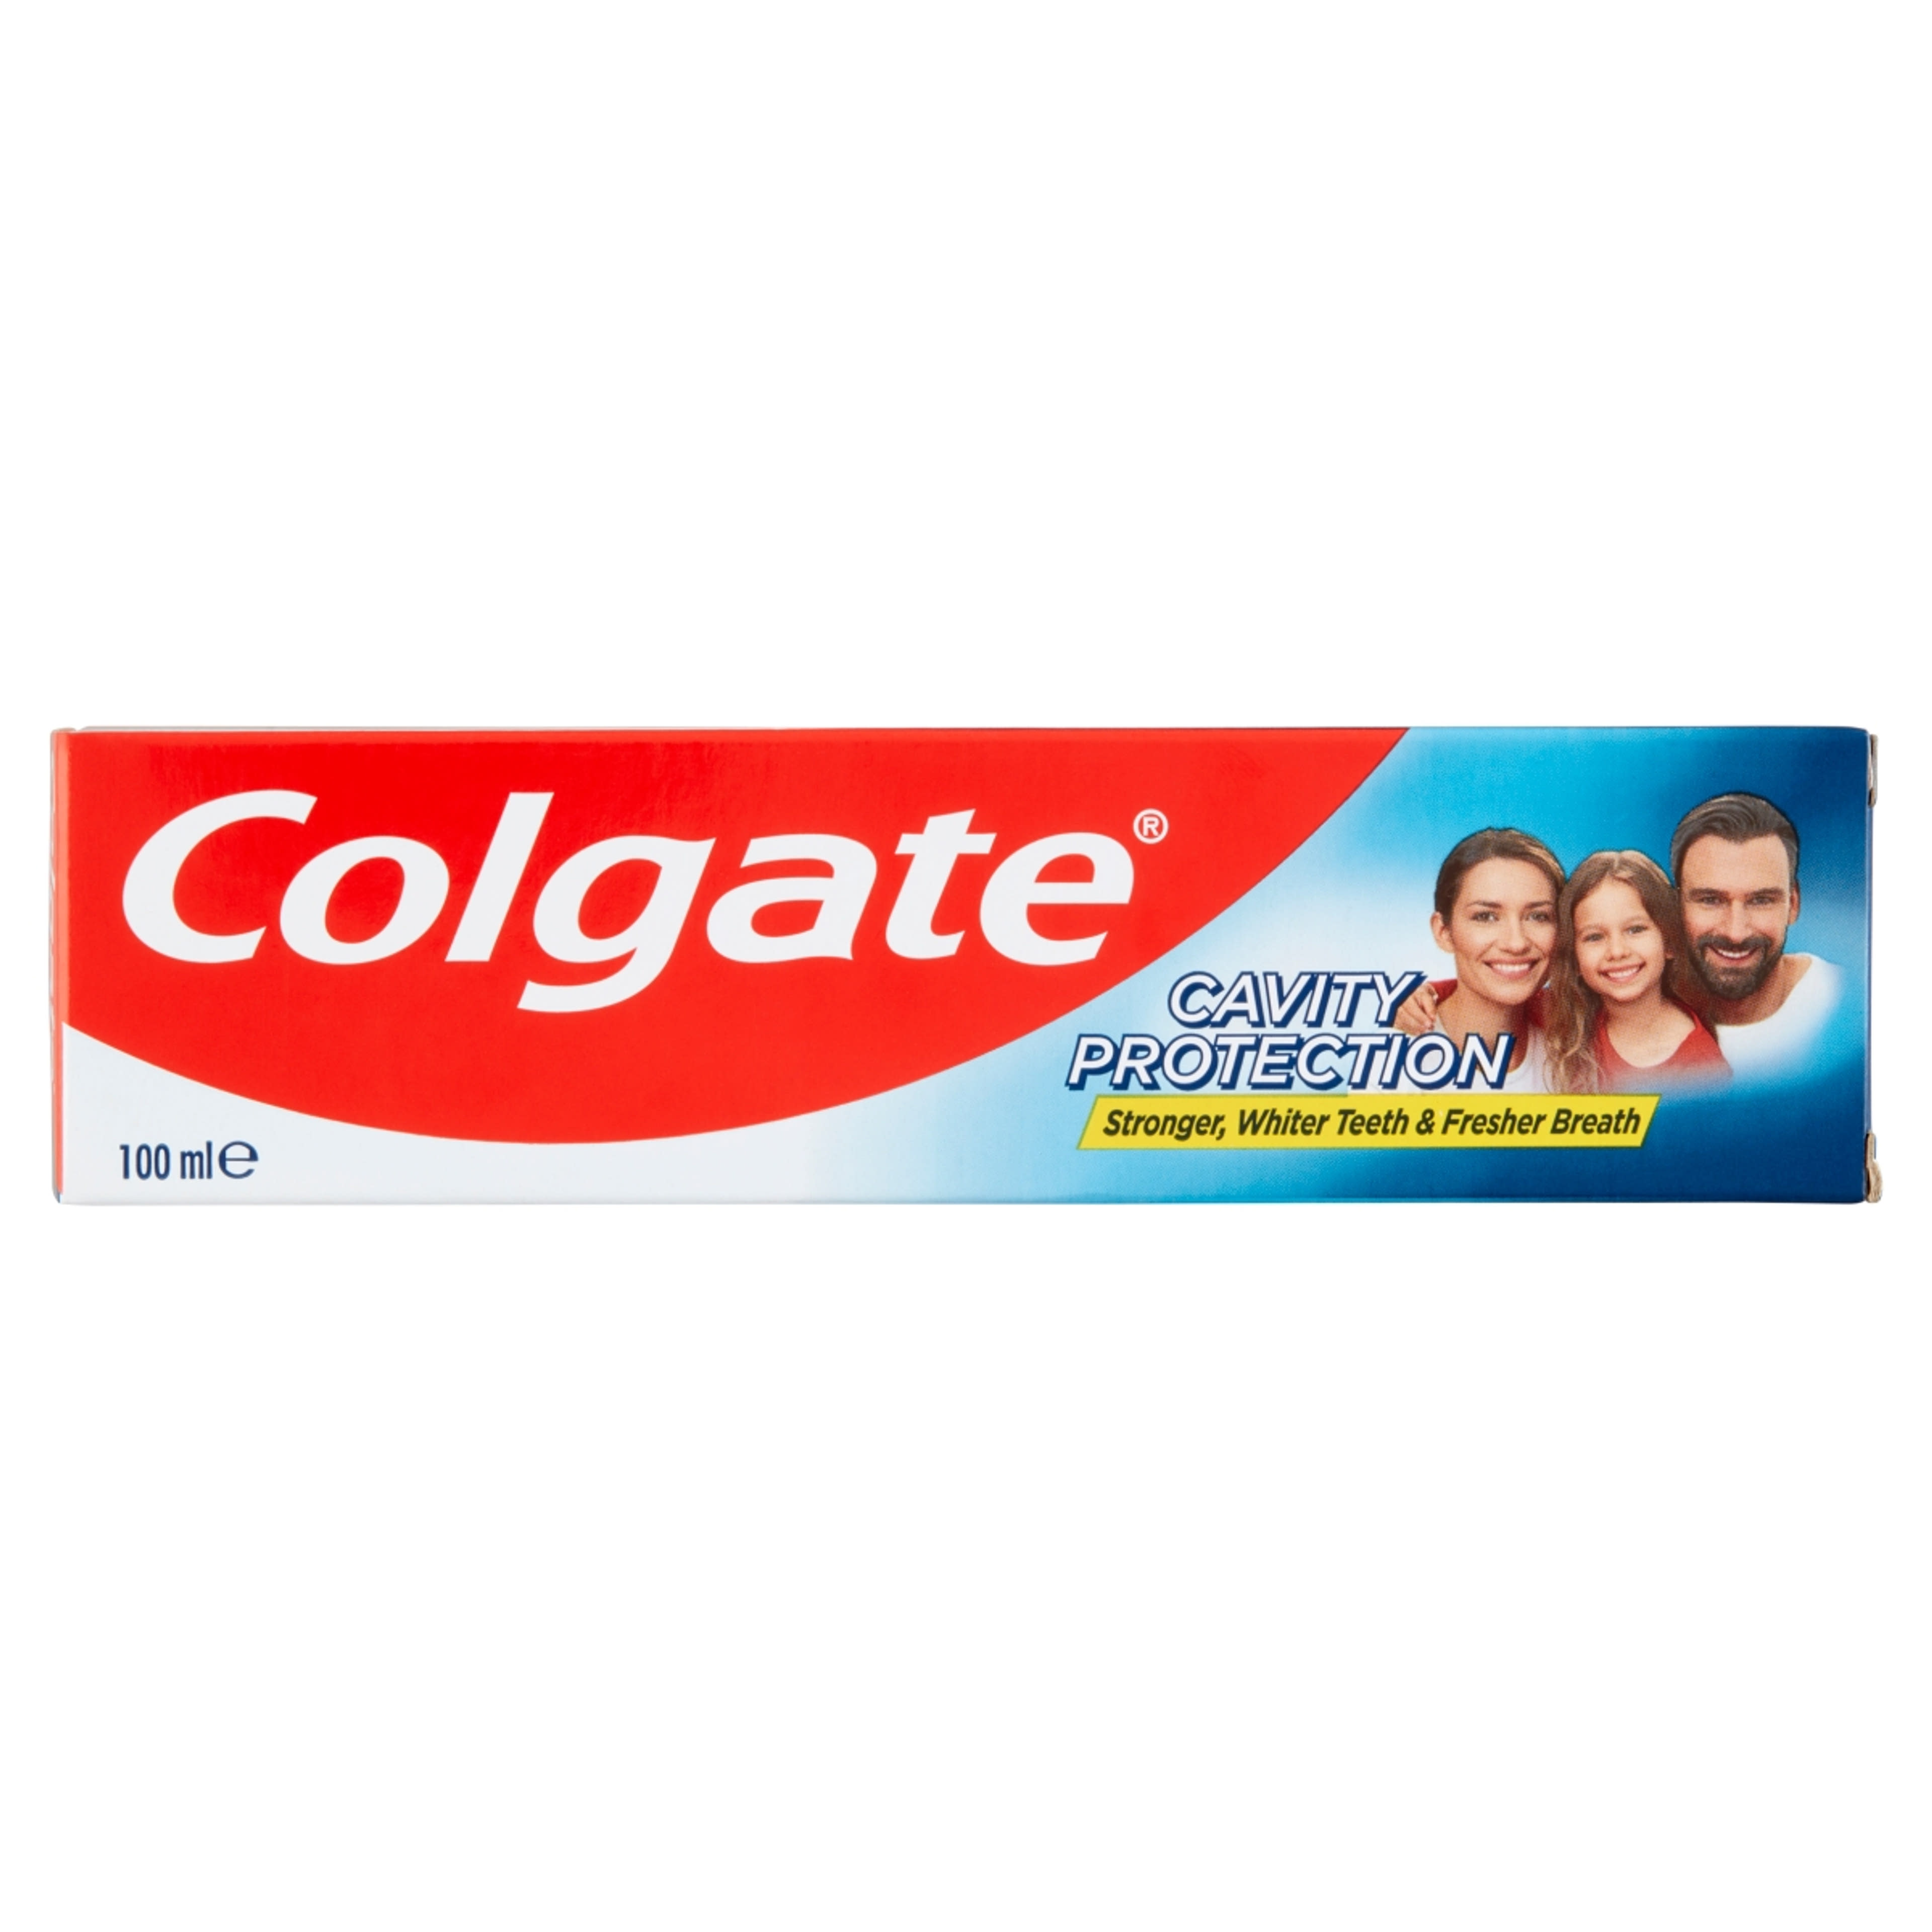 Colgate Cavity Protection fogkrém - 100 ml